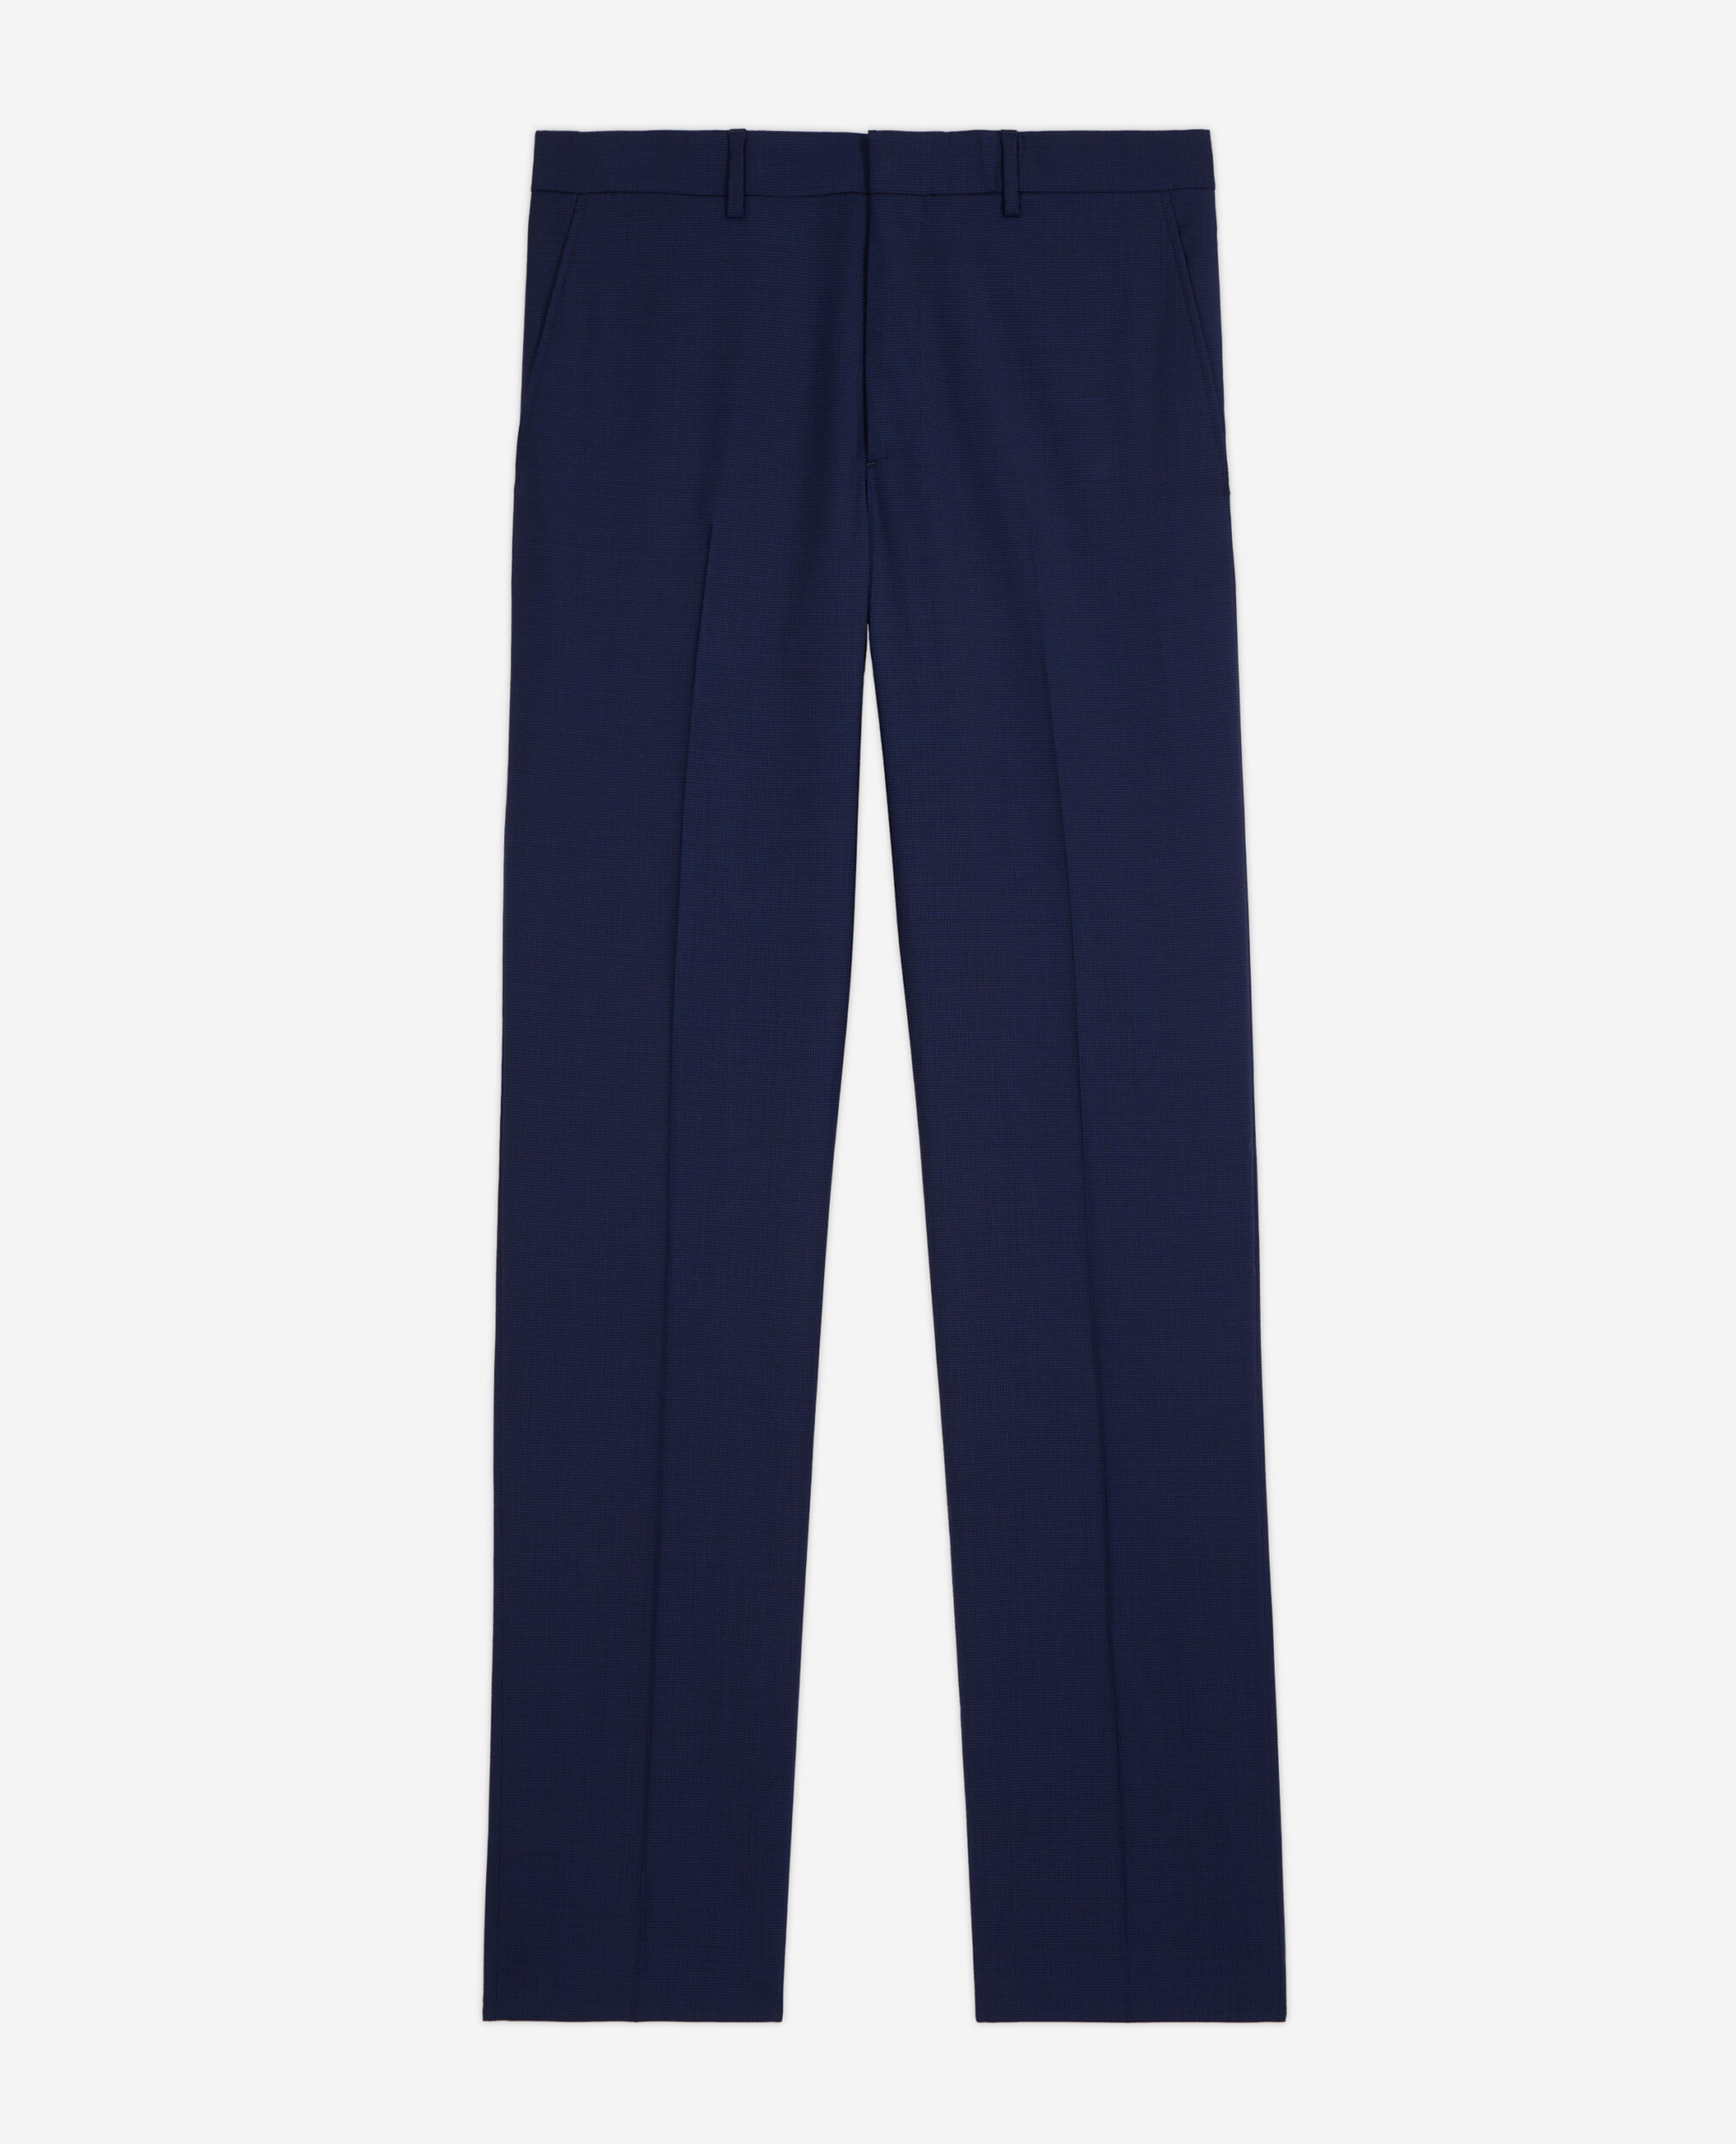 Pantalón traje micromotivo azul marino, NAVY, hi-res image number null